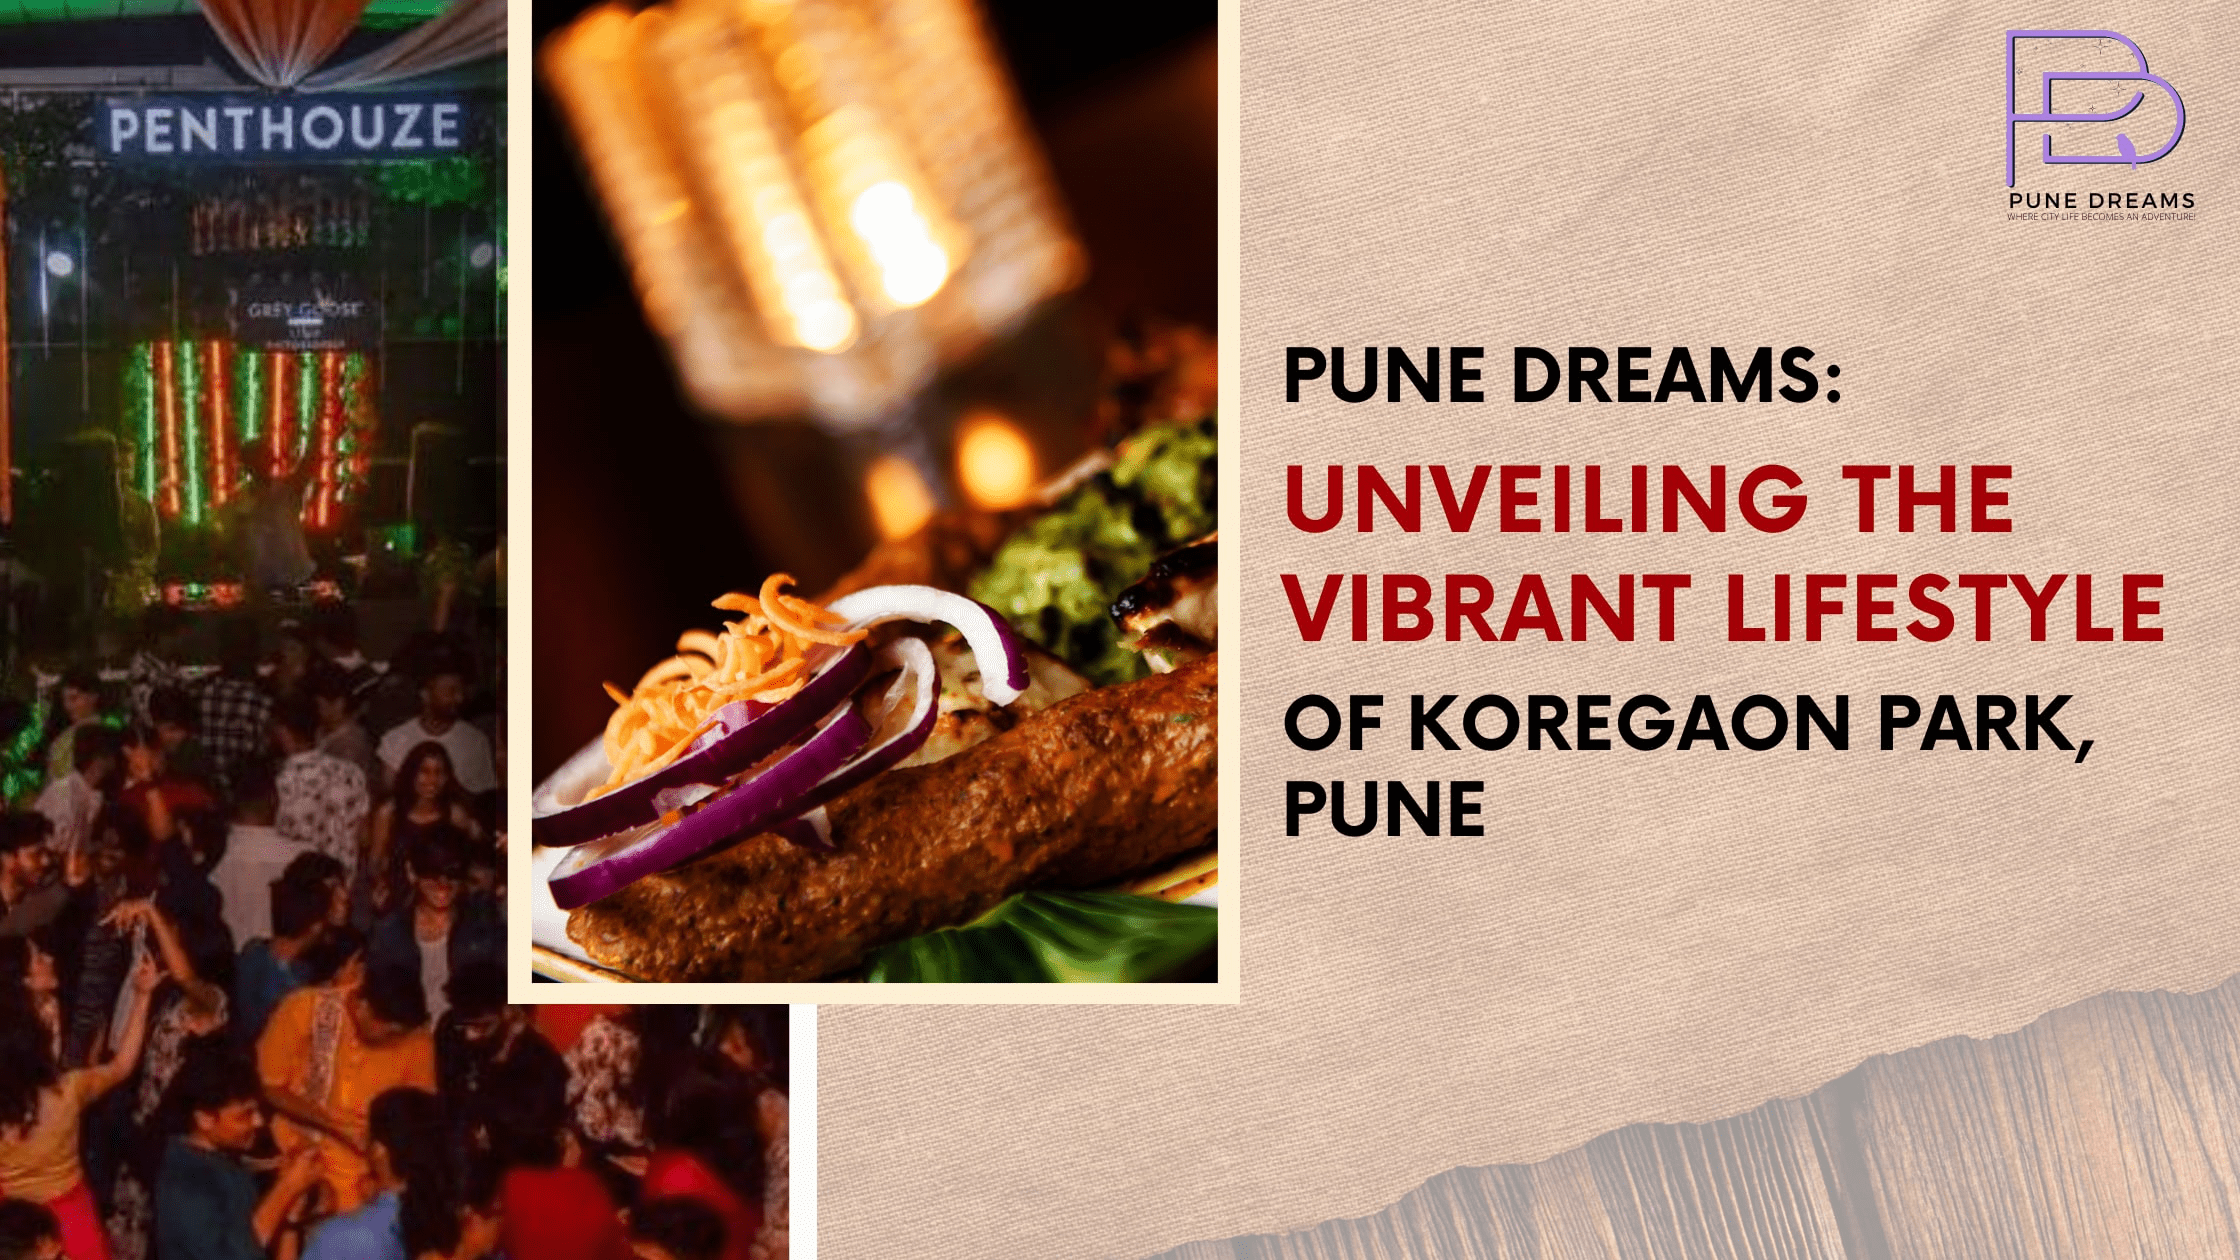 Pune Dreams: Unveiling the Vibrant Lifestyle of Koregaon Park, Pune